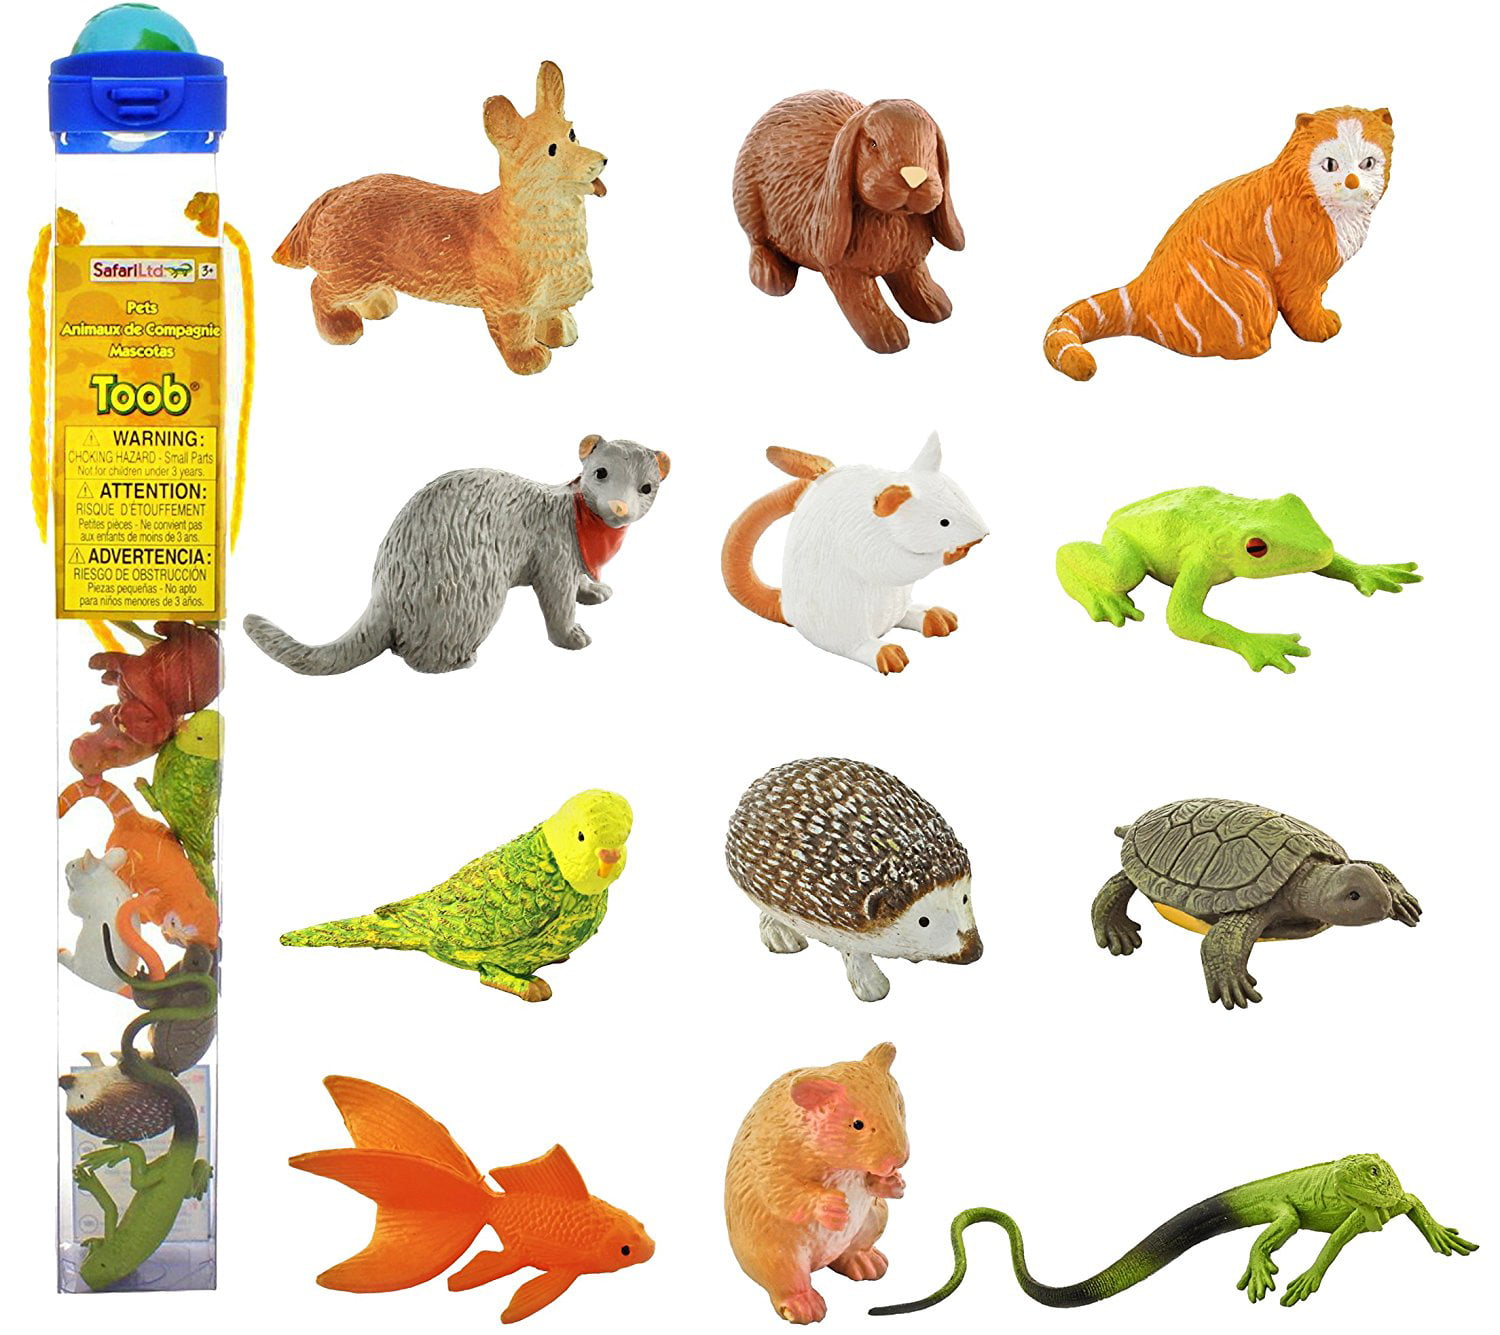 Domestic Cats Toob Mini Figures Safari Ltd NEW Toys Educational Figurines 